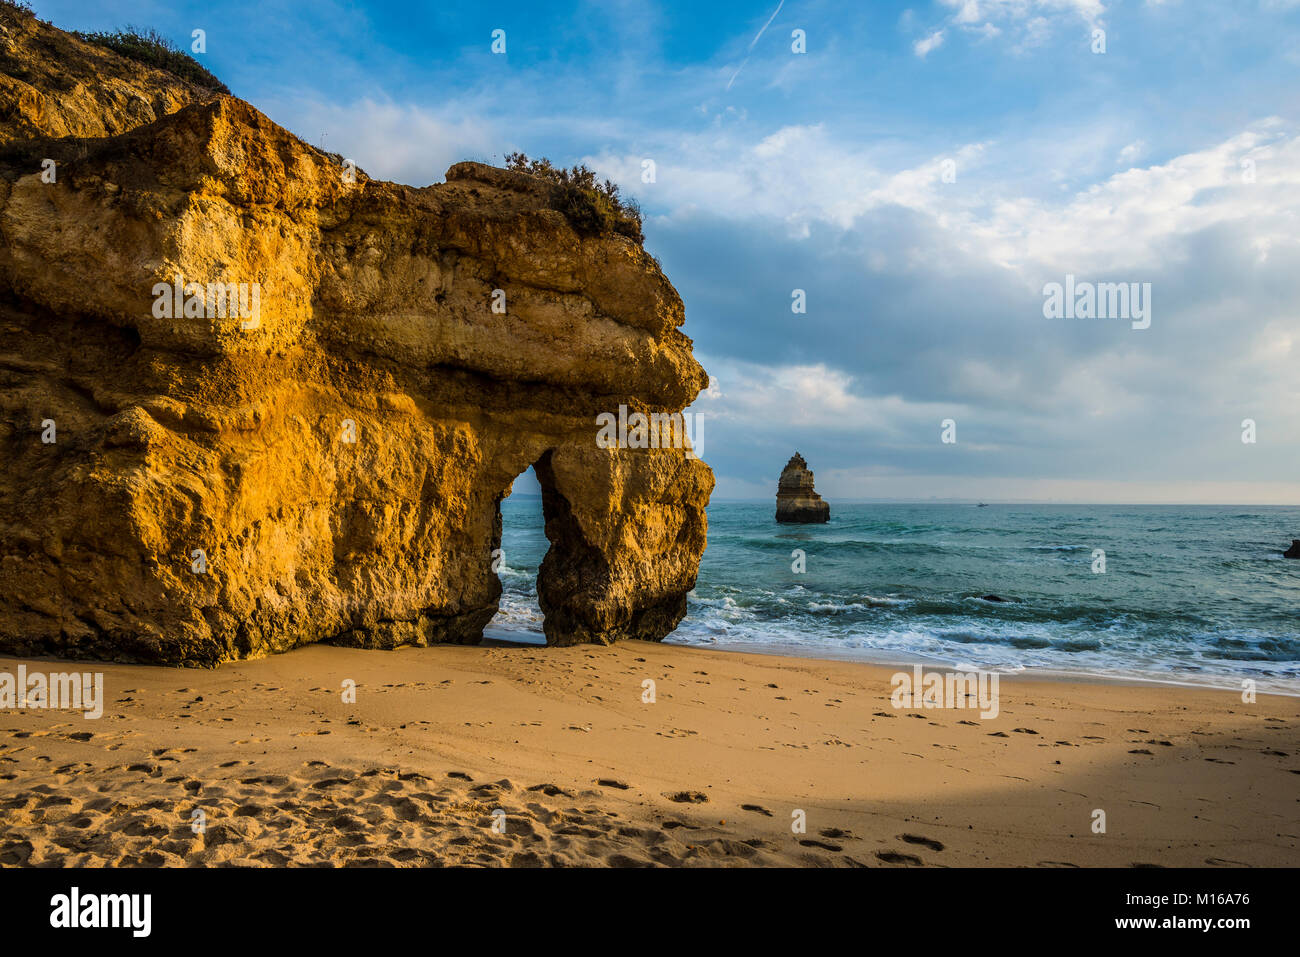 Rocky coast with beach and red rocks, Praia do Camilo, Lagos, Algarve, Portugal Stock Photo